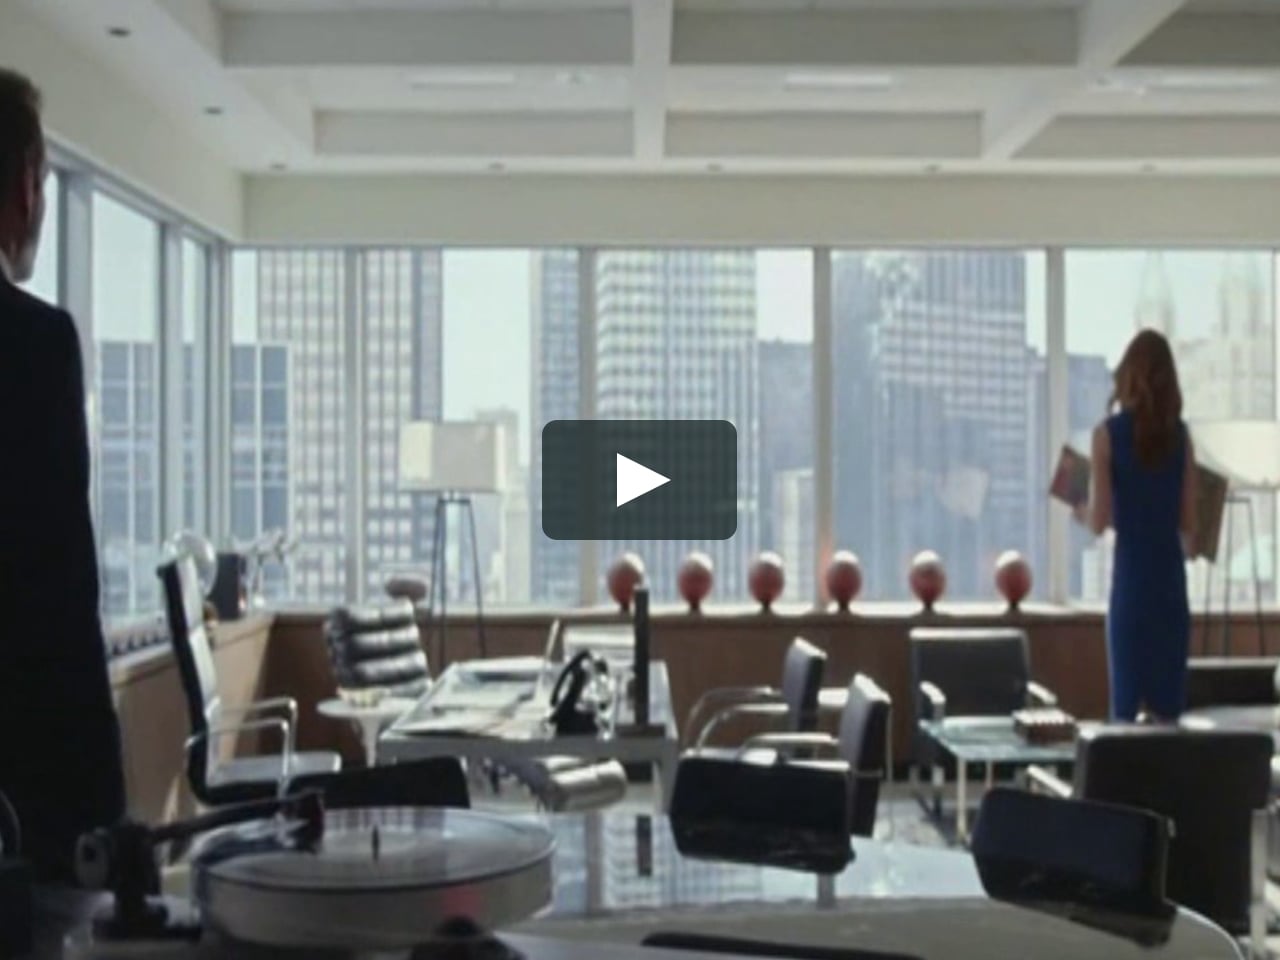 I don't have dreams - Harvey Specter on Vimeo